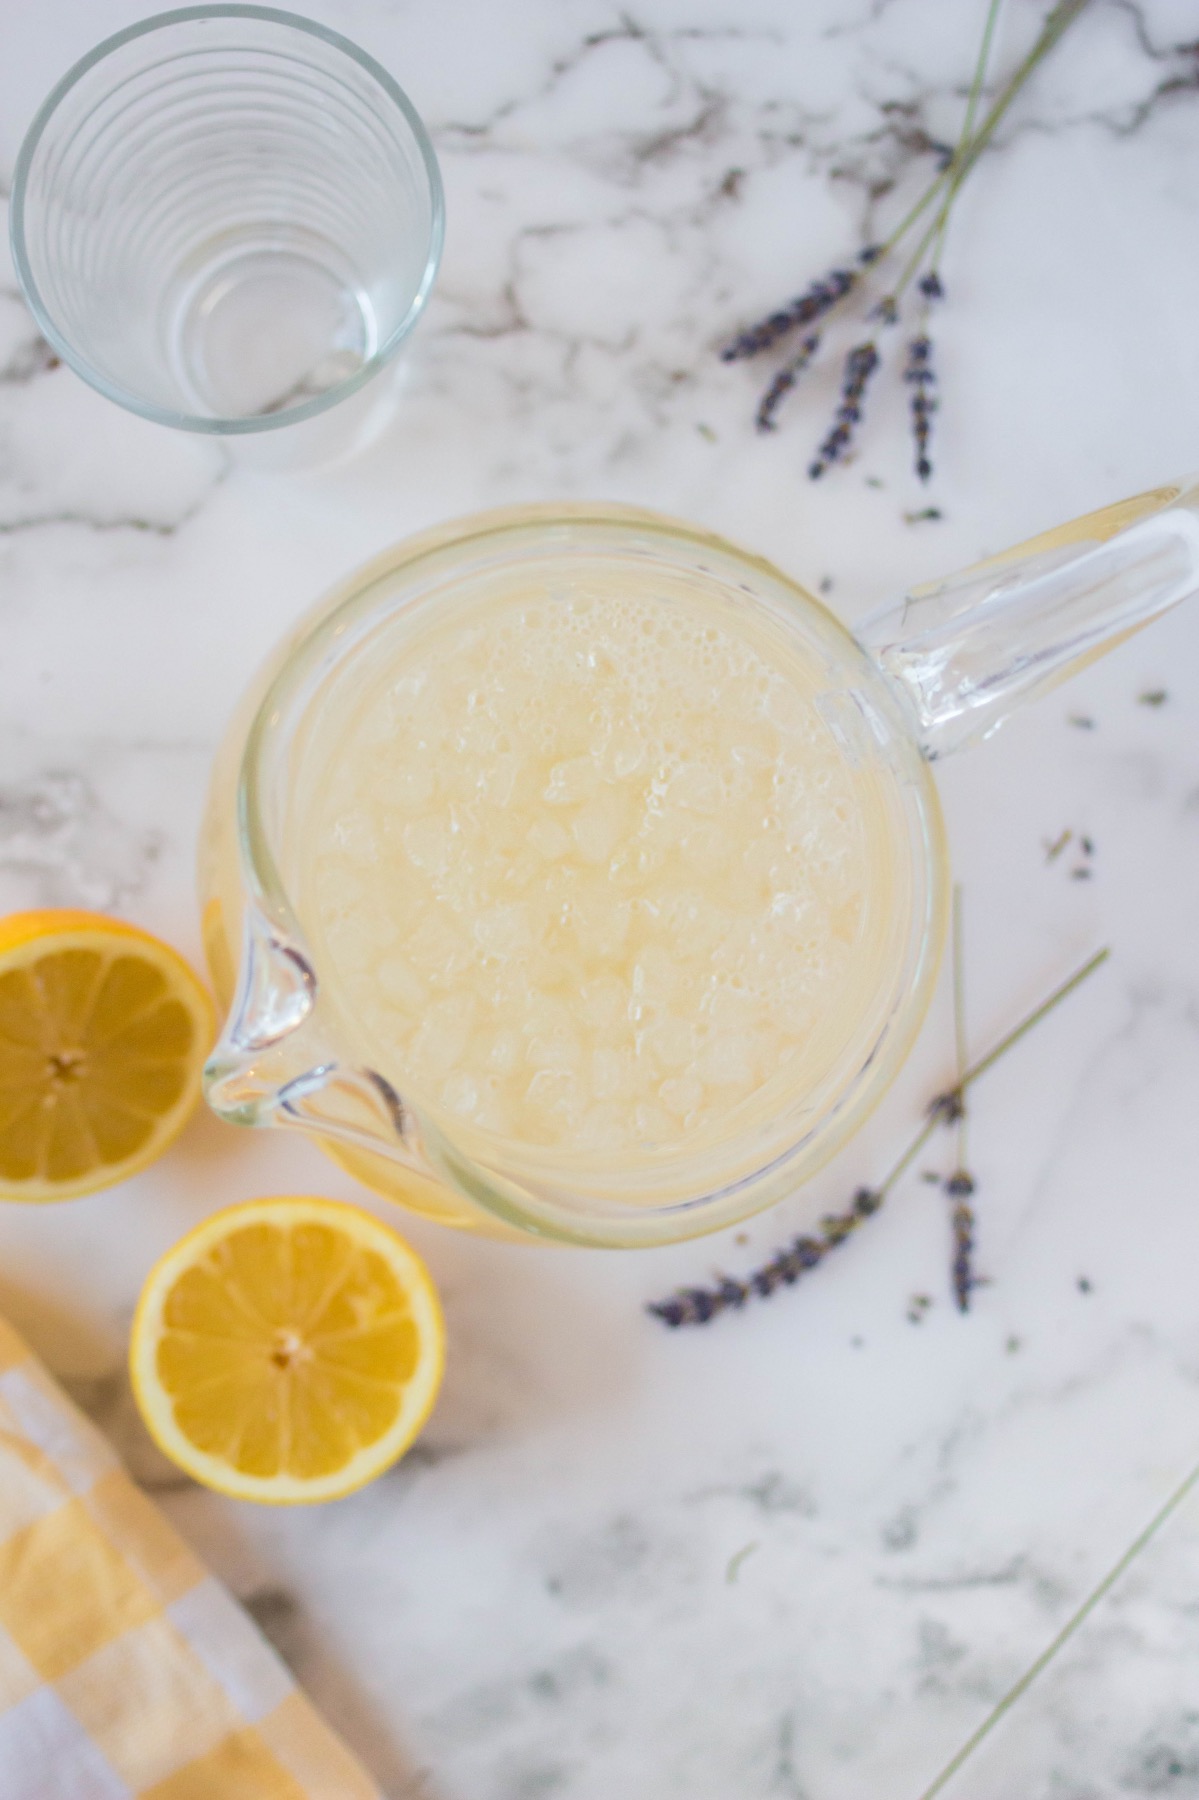 pour the homemade lavender lemonade recipe into the pitcher